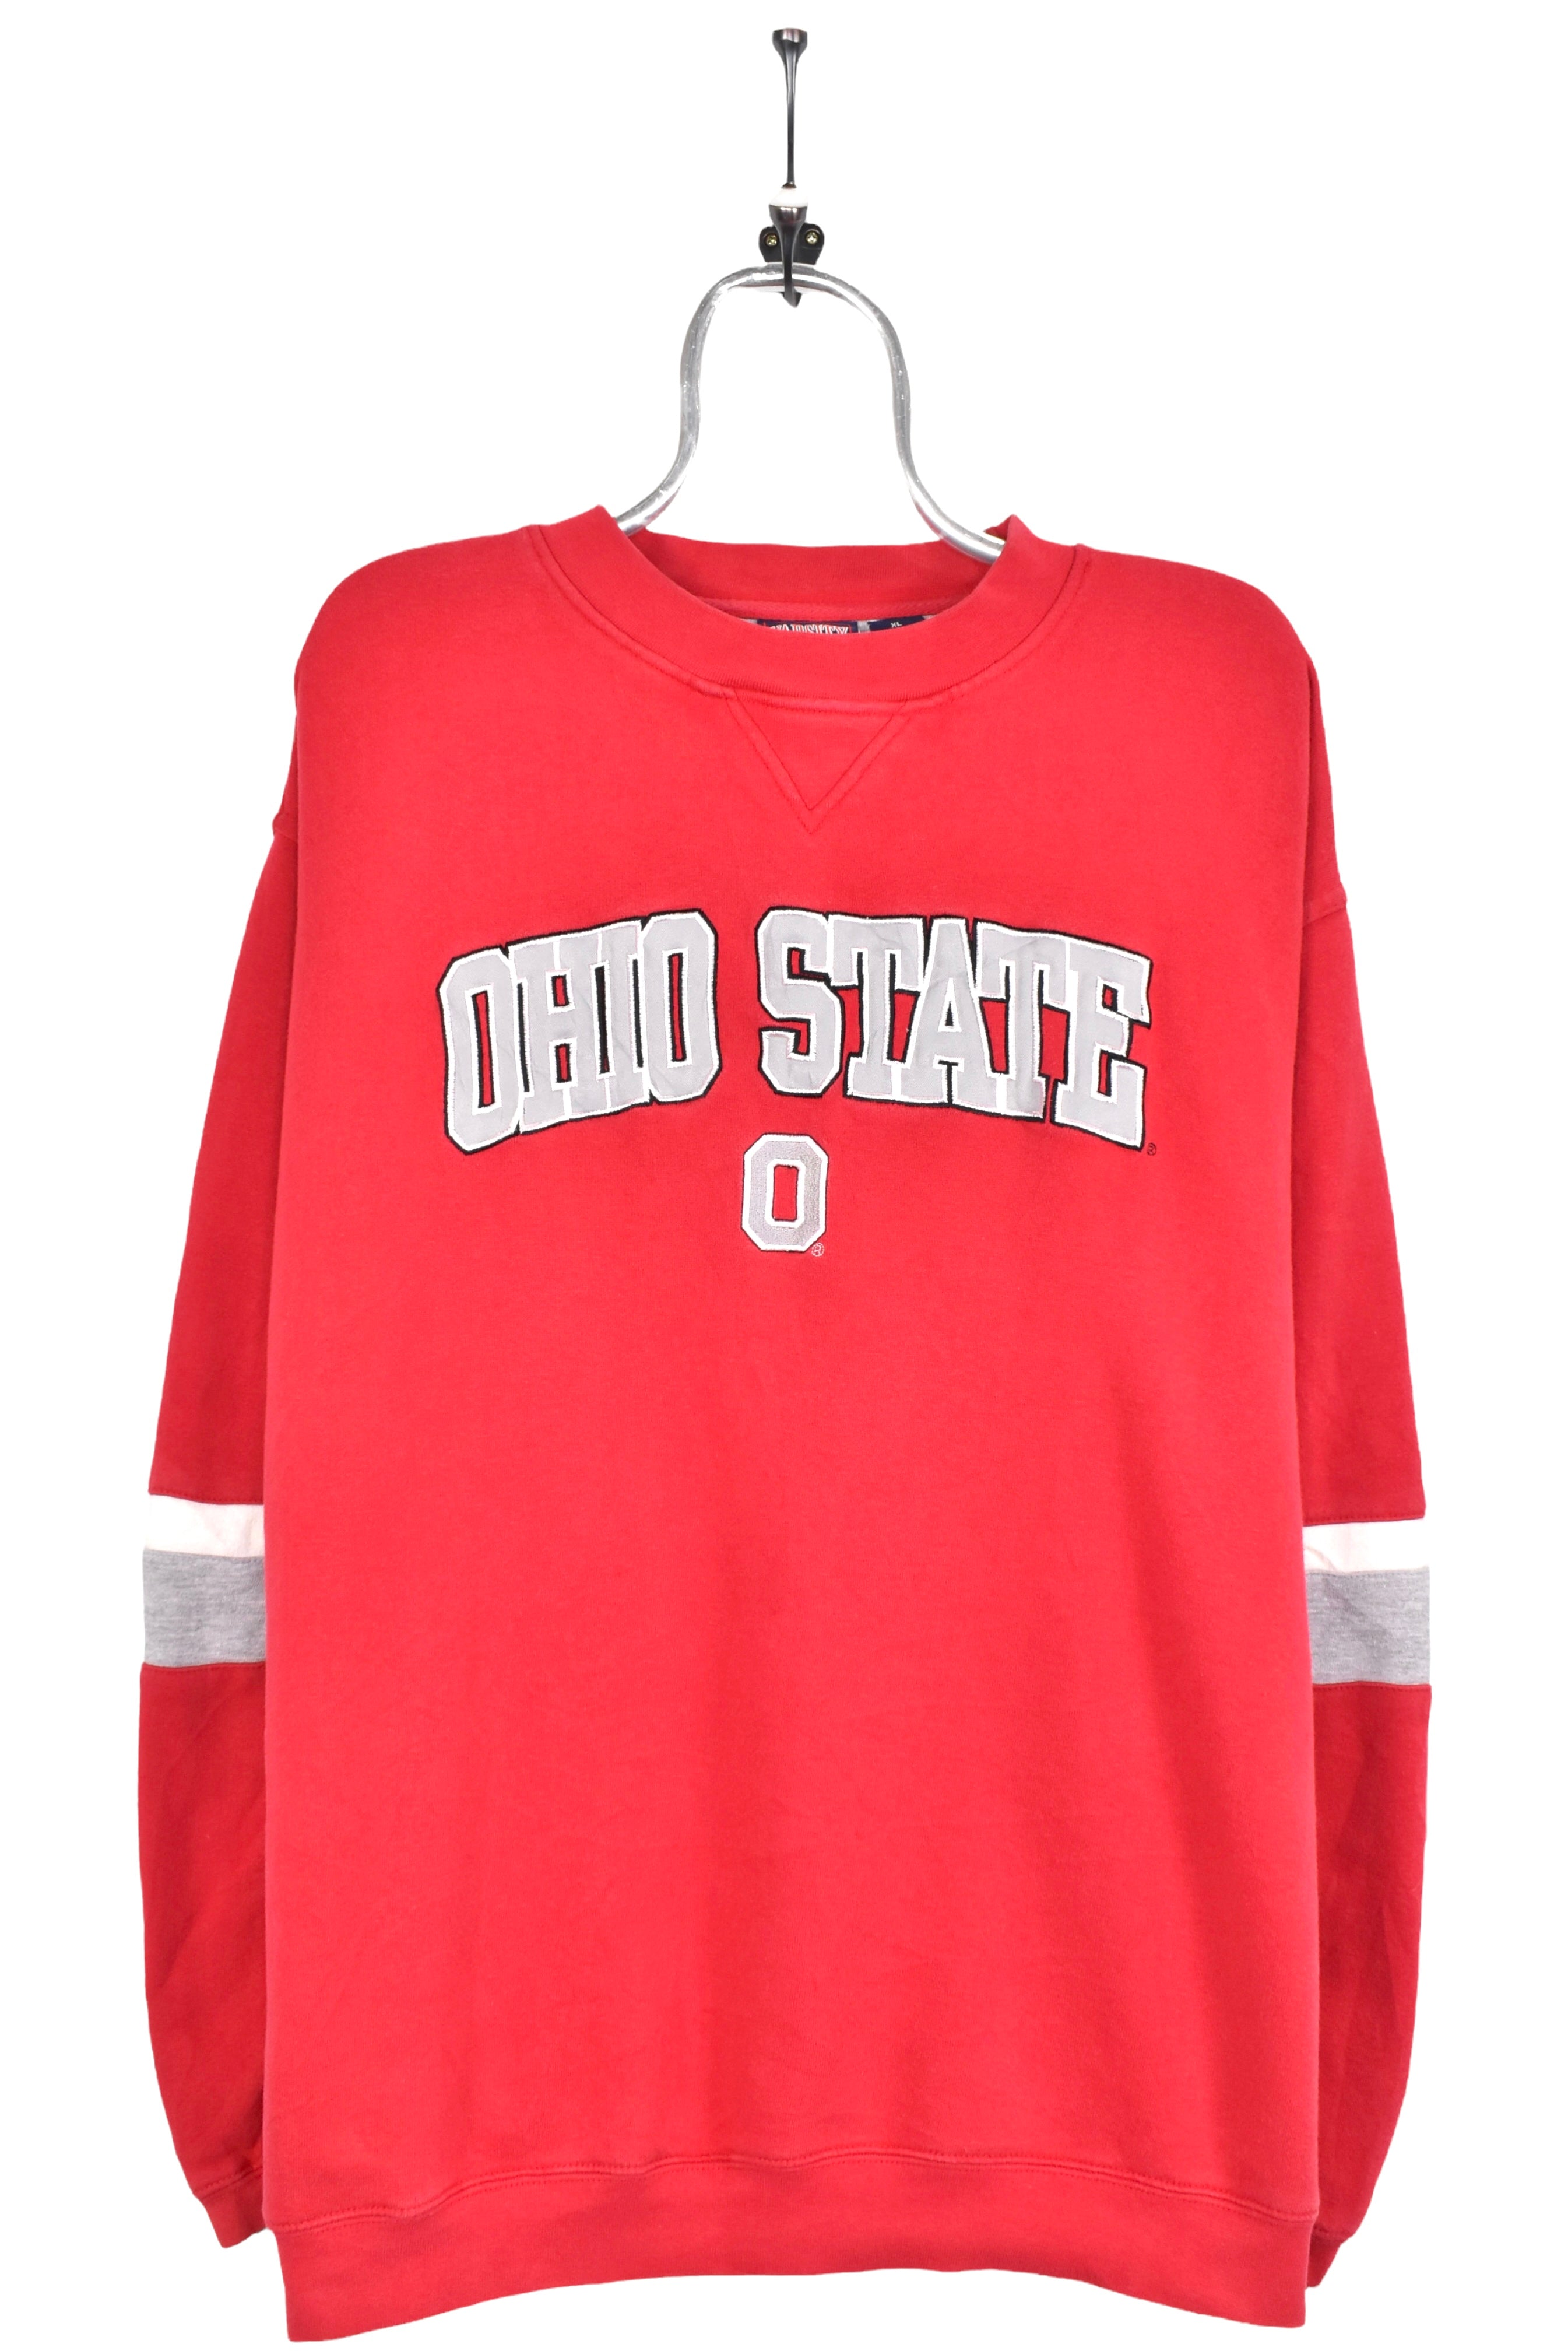 Vintage Ohio State University sweatshirt, red embroidered crewneck - AU XXL COLLEGE